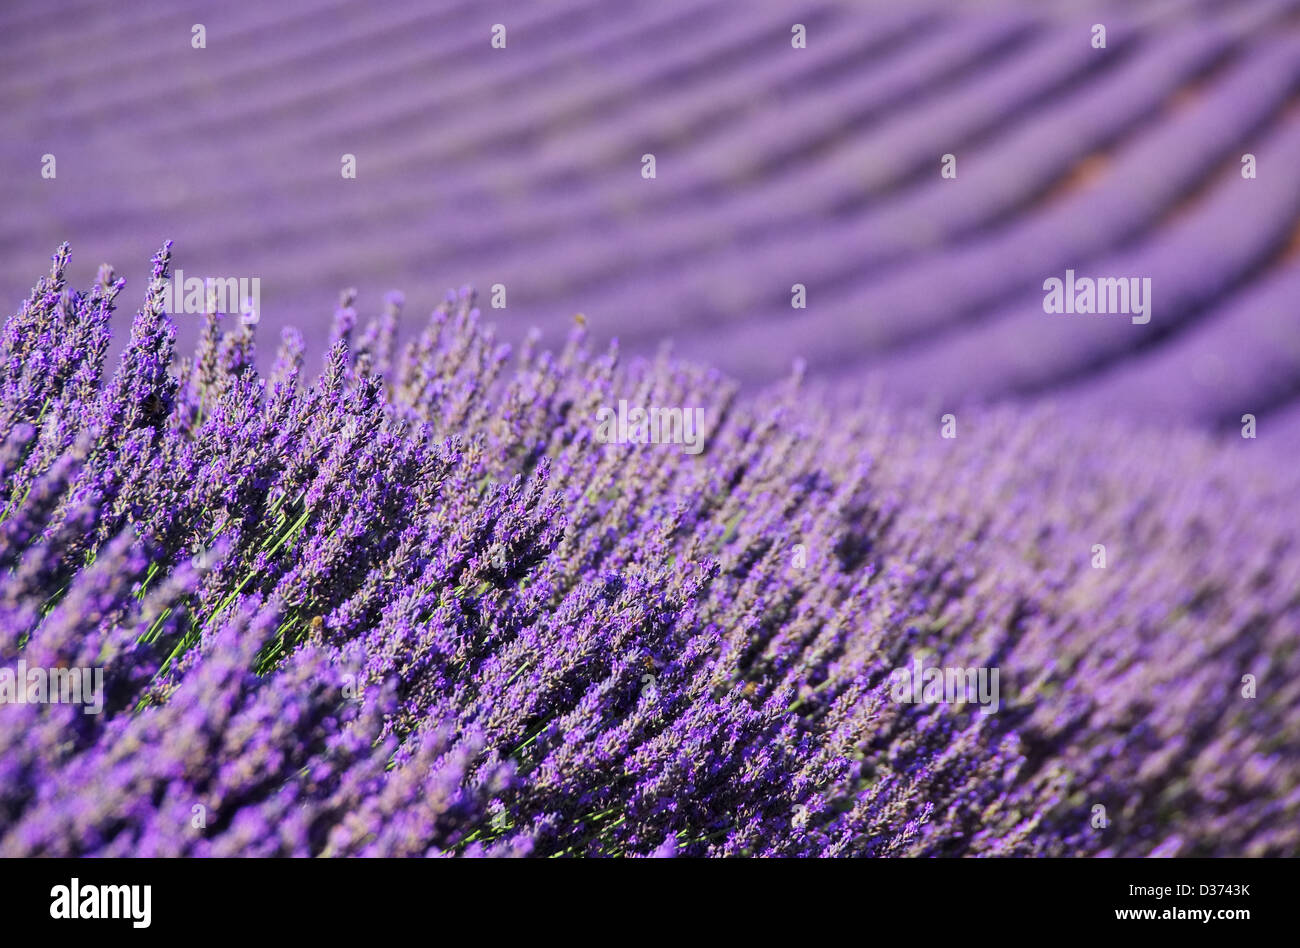 Lavendelfeld - lavender field 69 Stock Photo